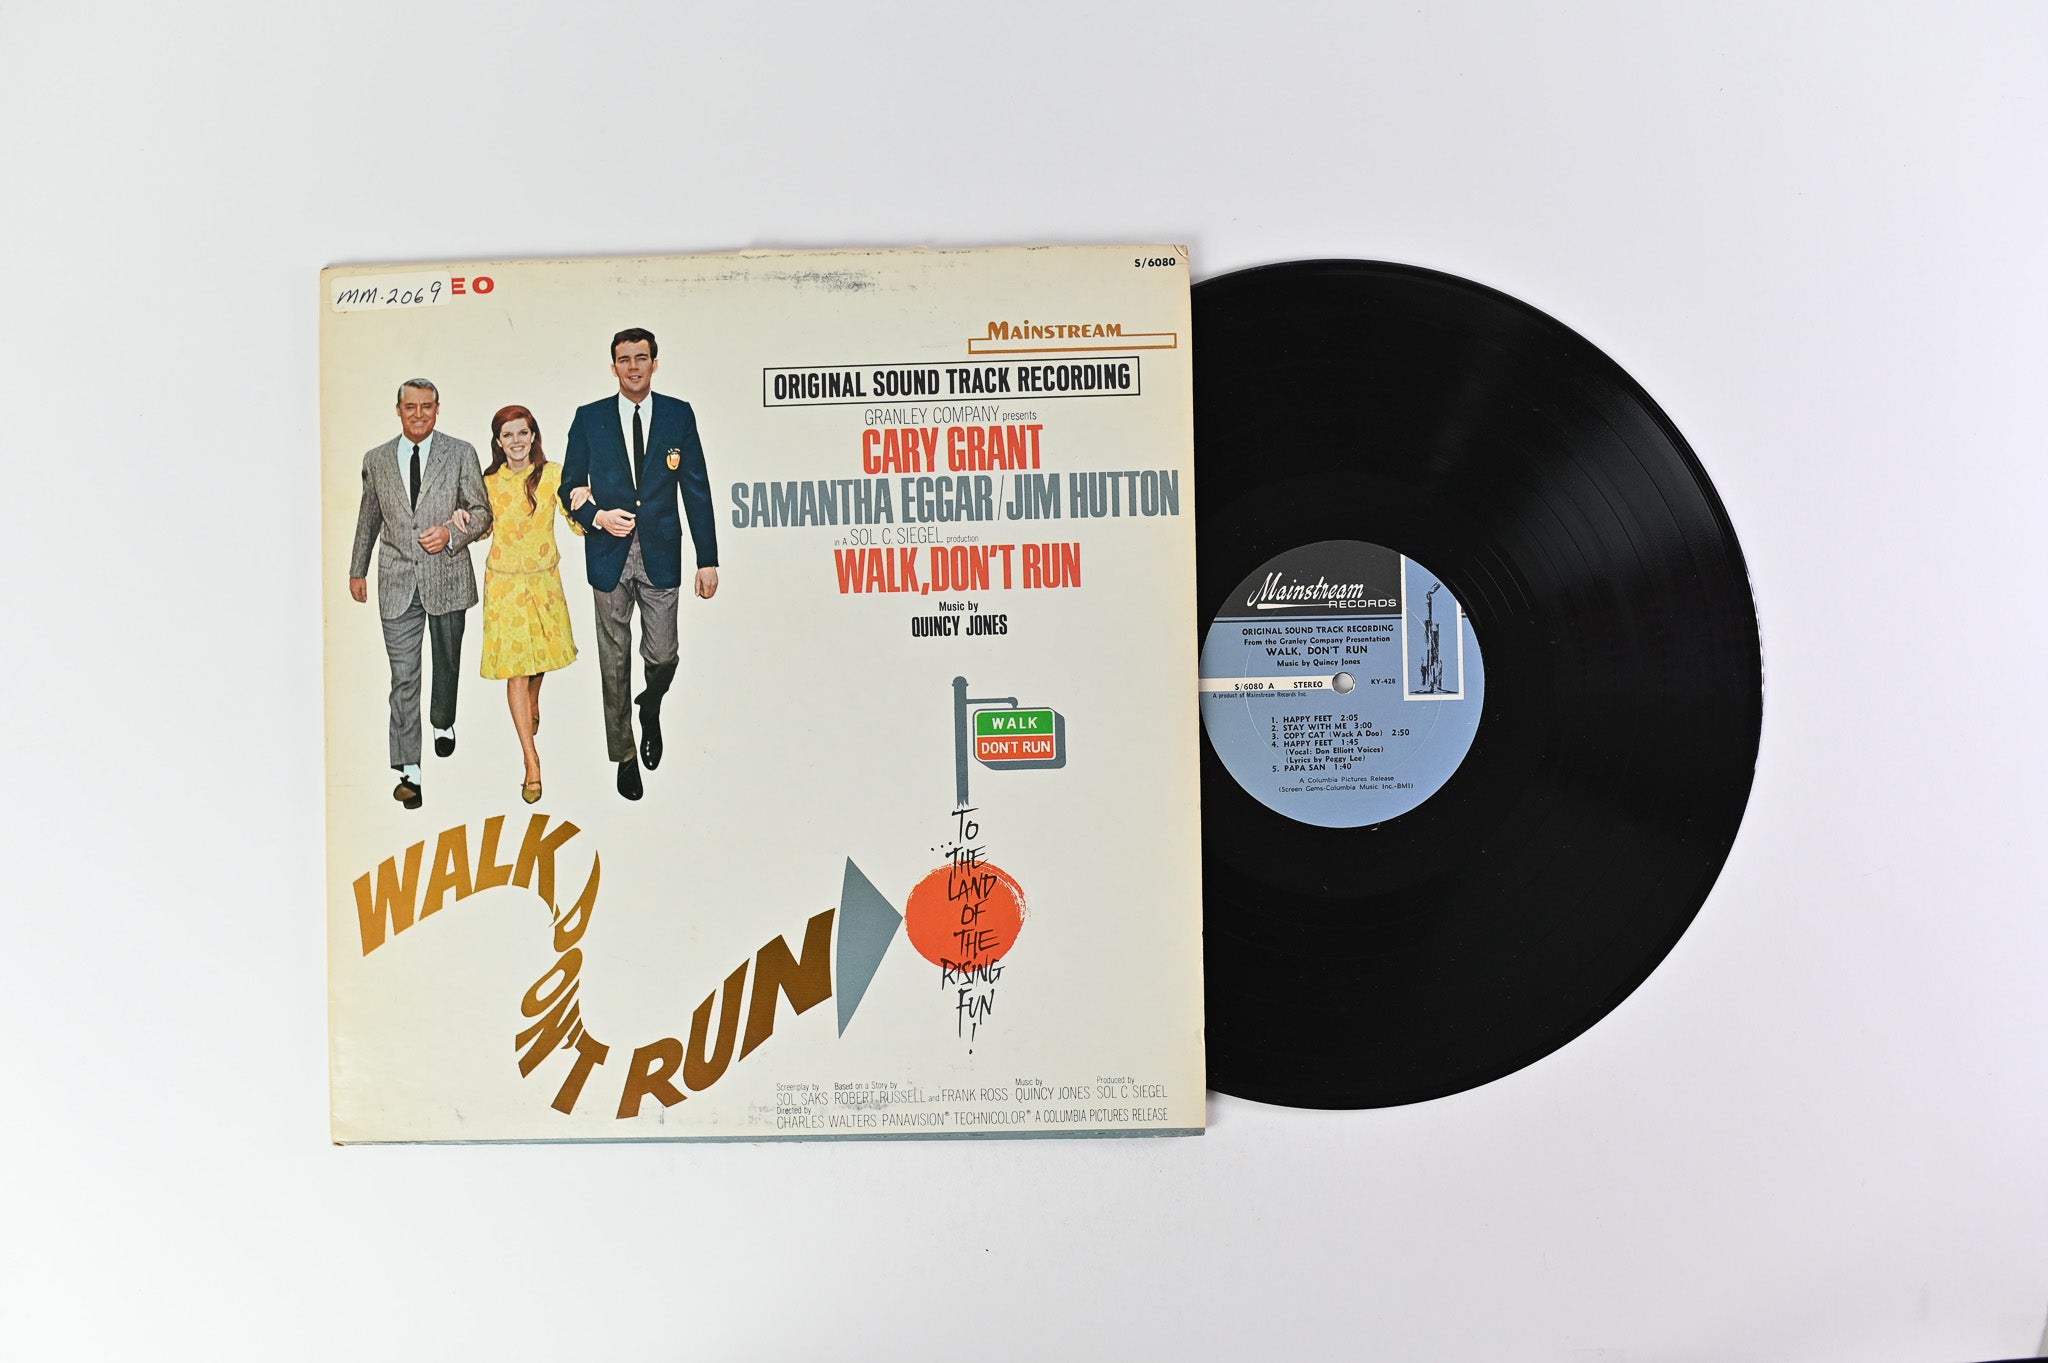 Quincy Jones - Walk, Don't Run - Original Sound Track Recording on Mainstream Records